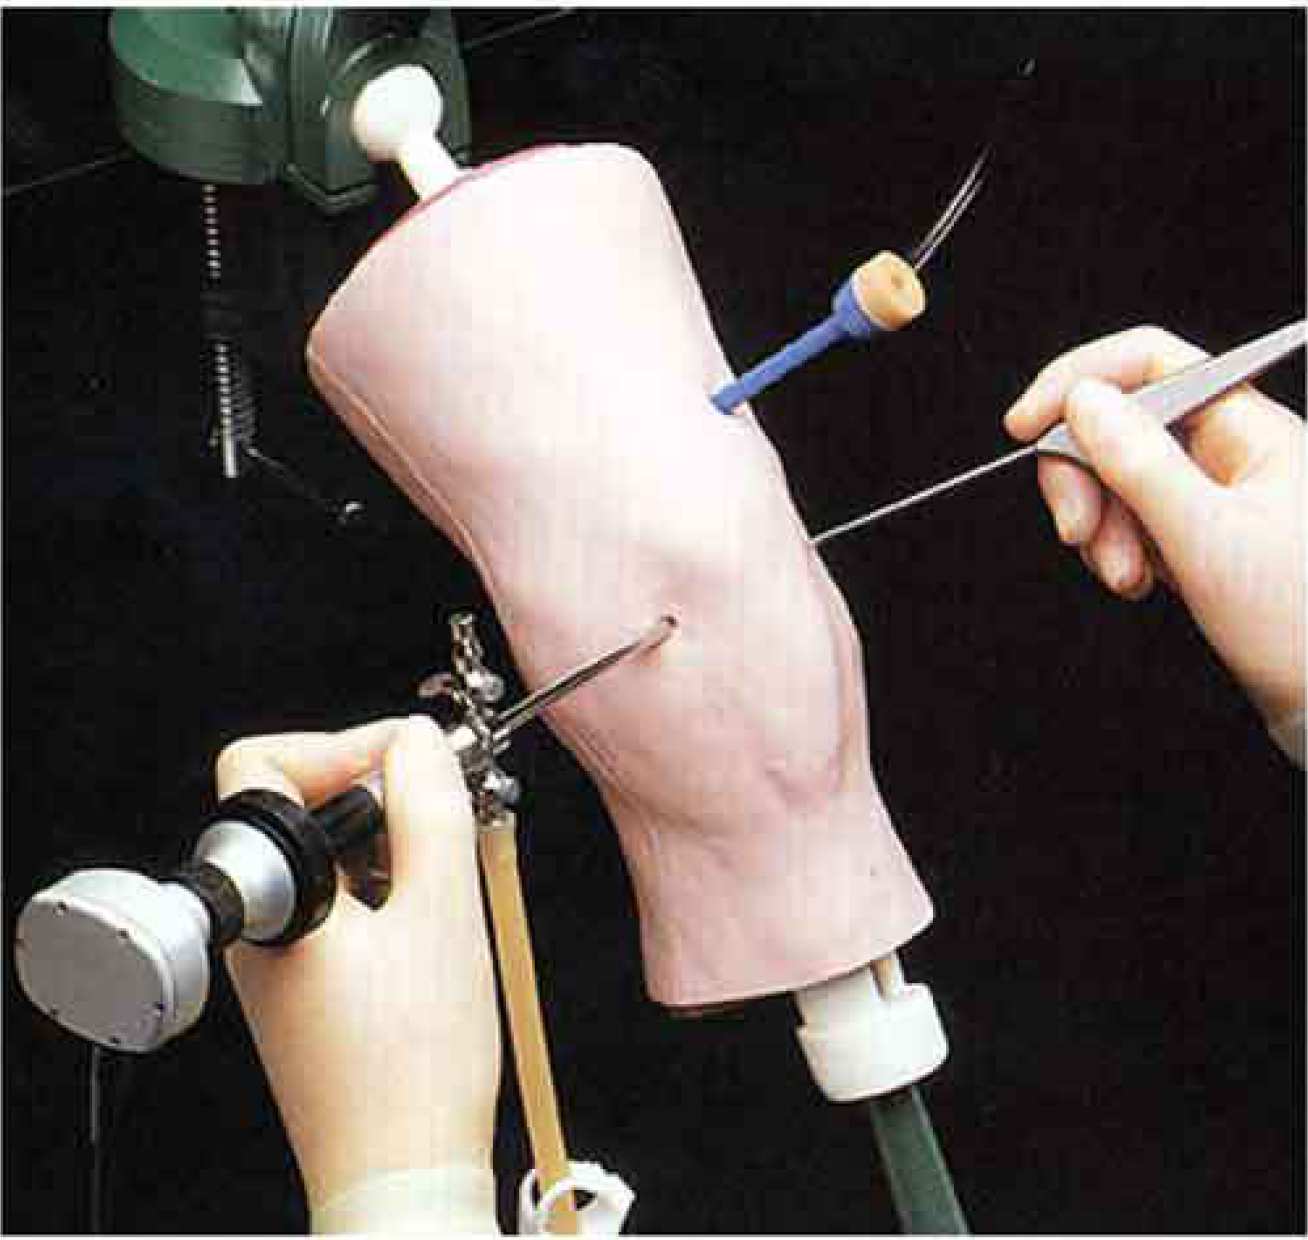  Standard Knee Arthroscopy Training